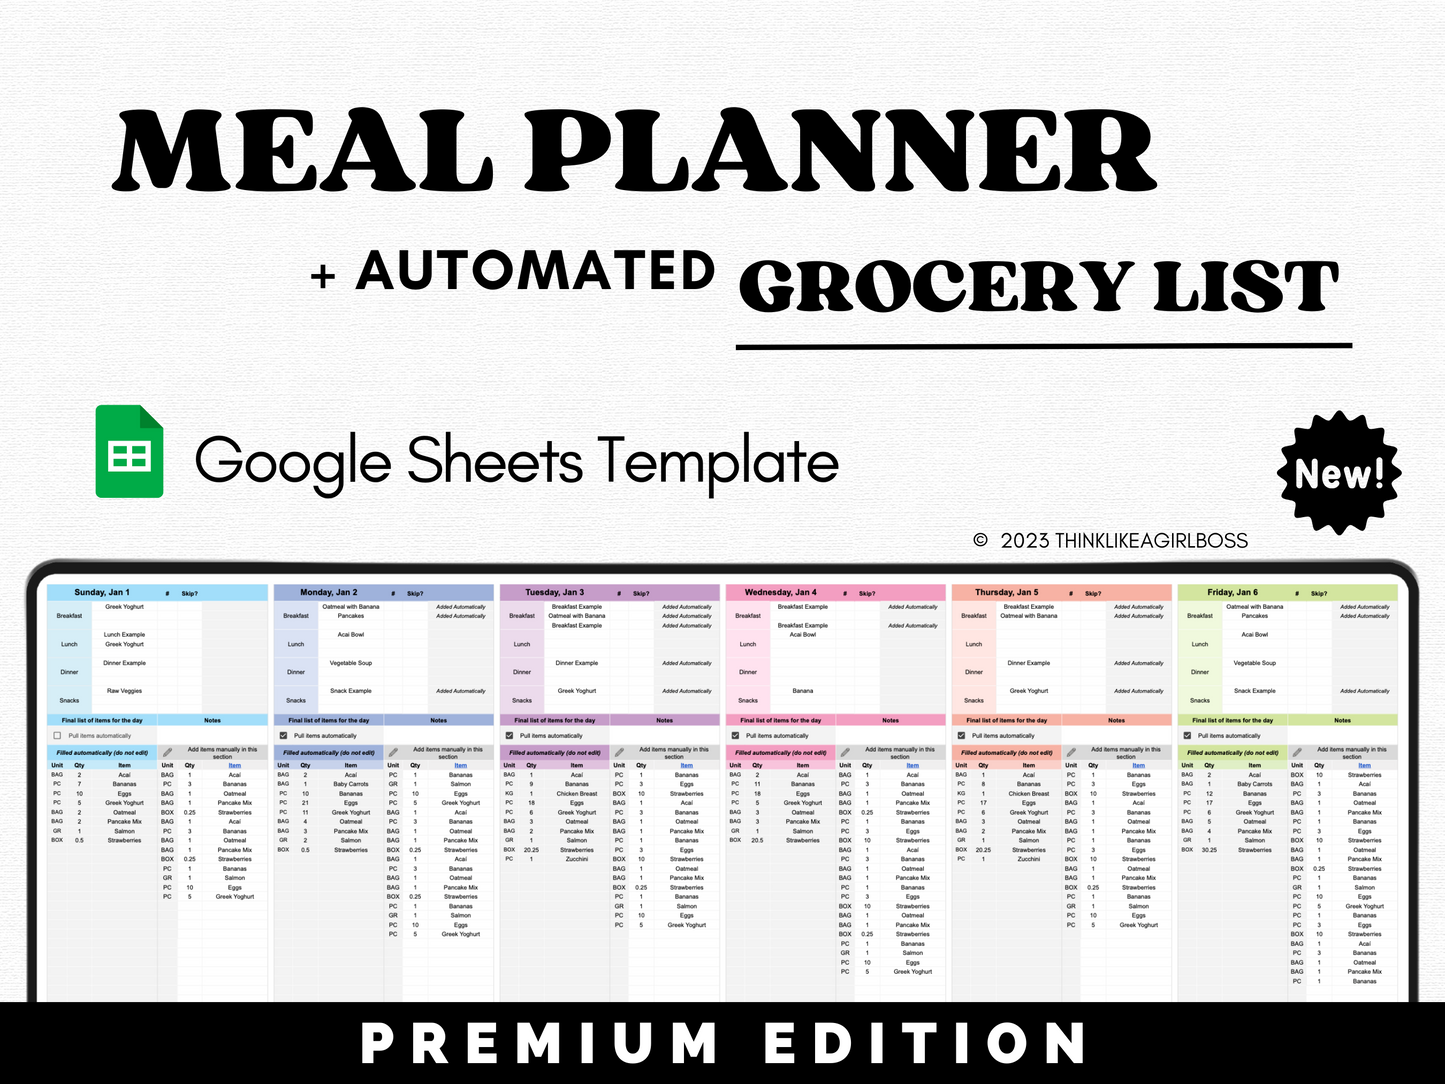 Meal Planner - V3 Premium Edition